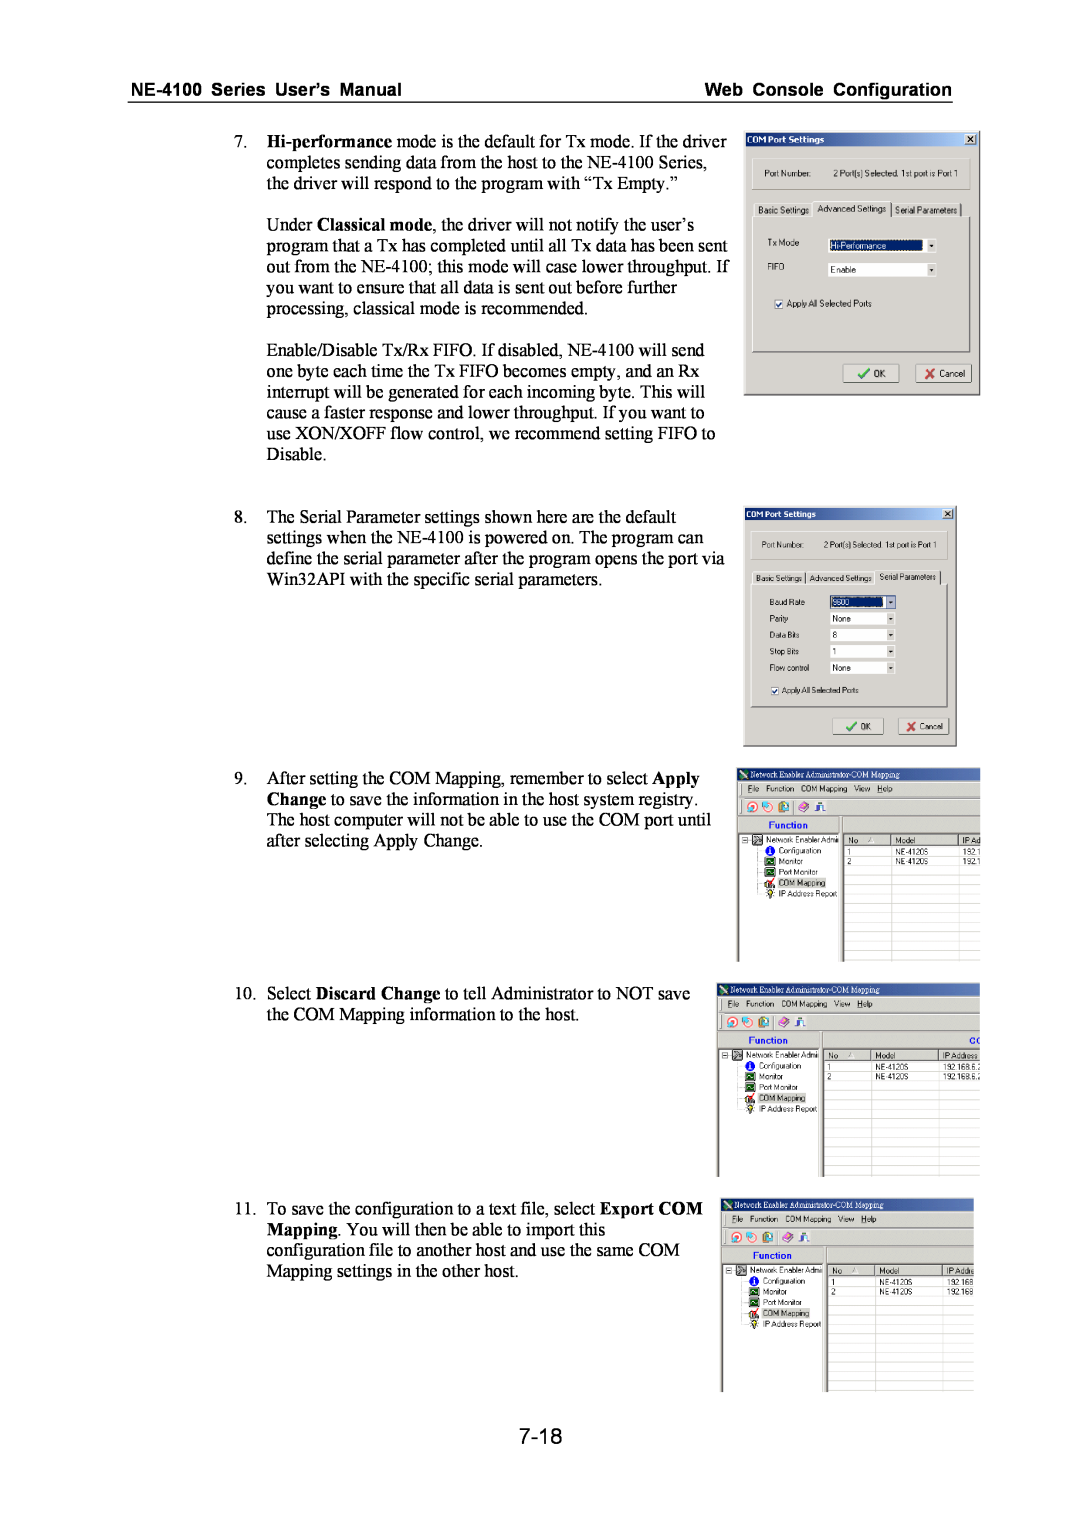 Moxa Technologies user manual 7-18, NE-4100 Series User’s Manual, Web Console Configuration 